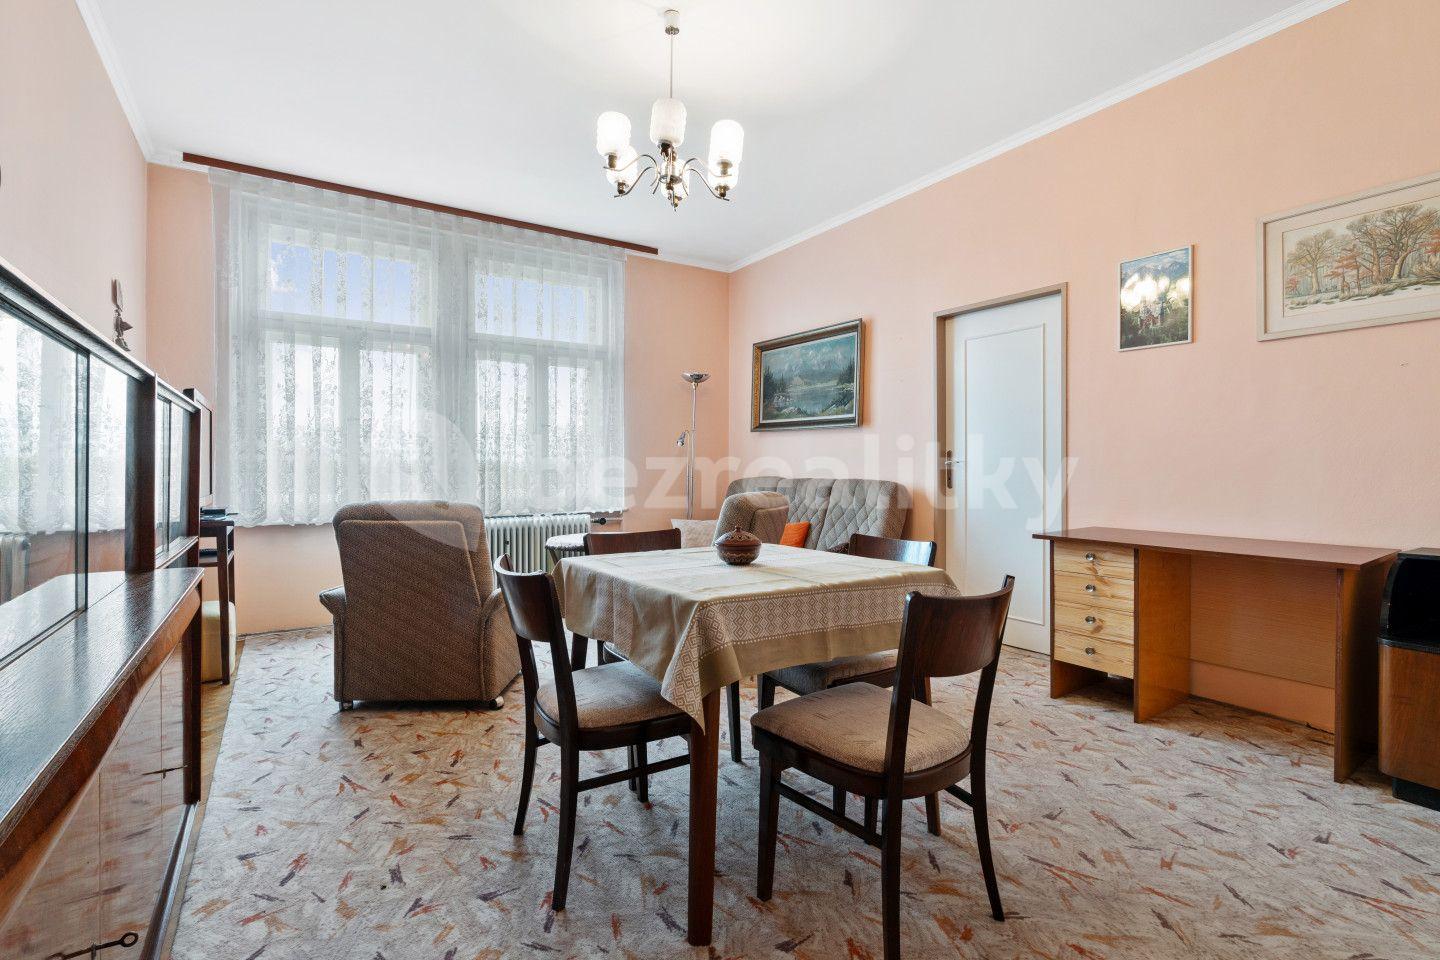 house for sale, 370 m², Rumunská, Teplice, Ústecký Region